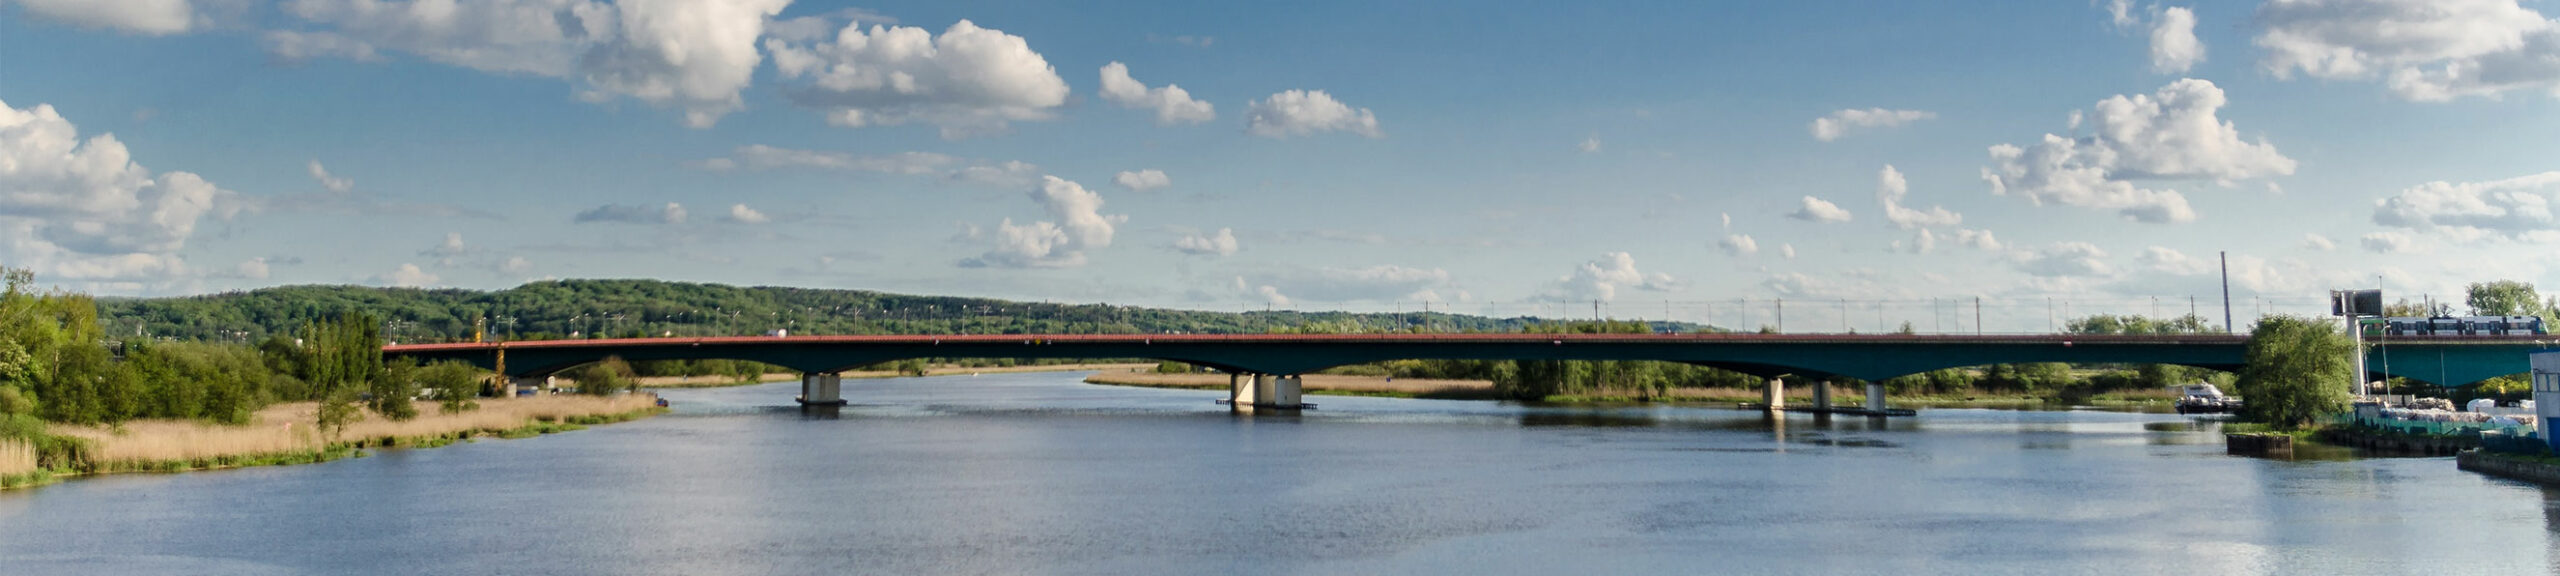 bridge crossing the water near Szczecin poland